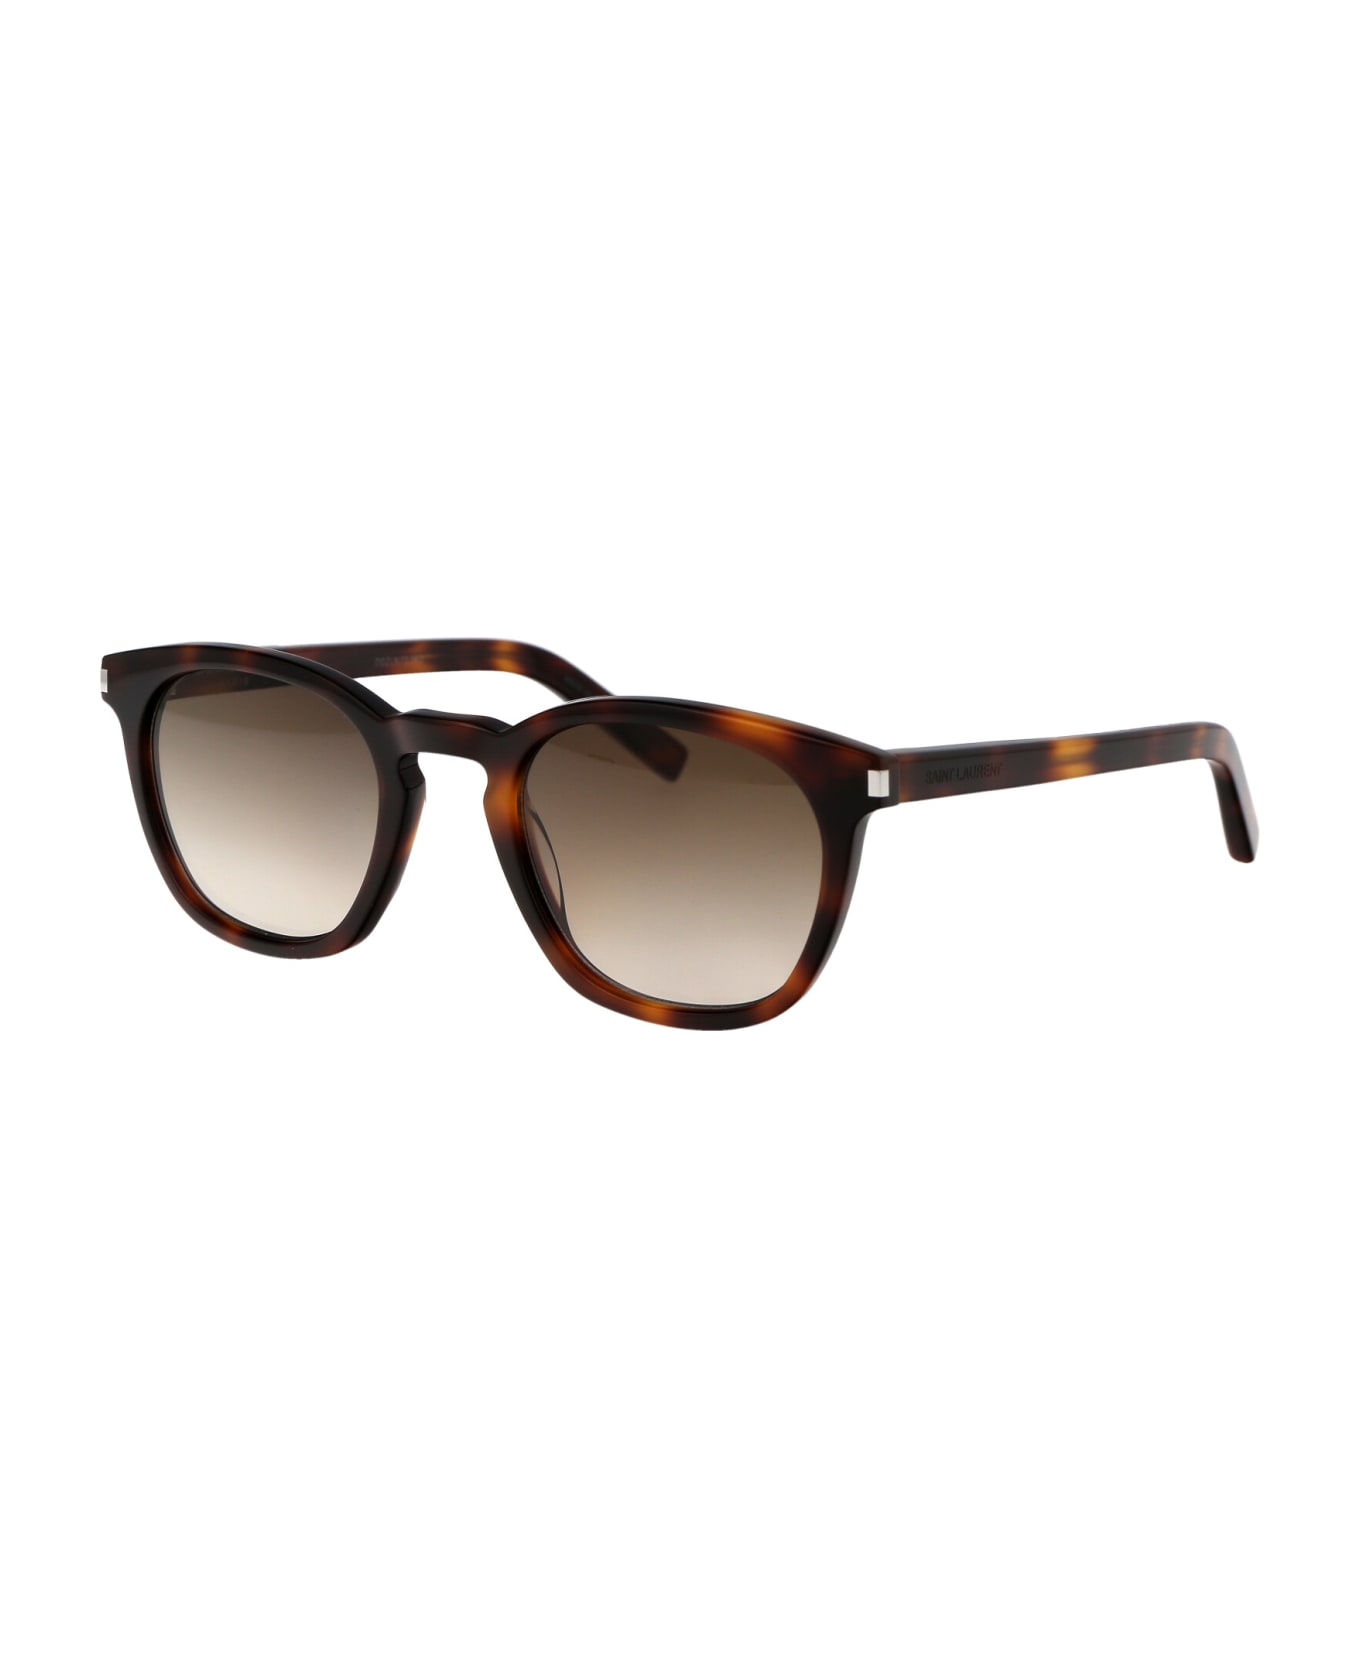 Saint Laurent Eyewear Sl 28 Sunglasses - 048 HAVANA HAVANA BROWN